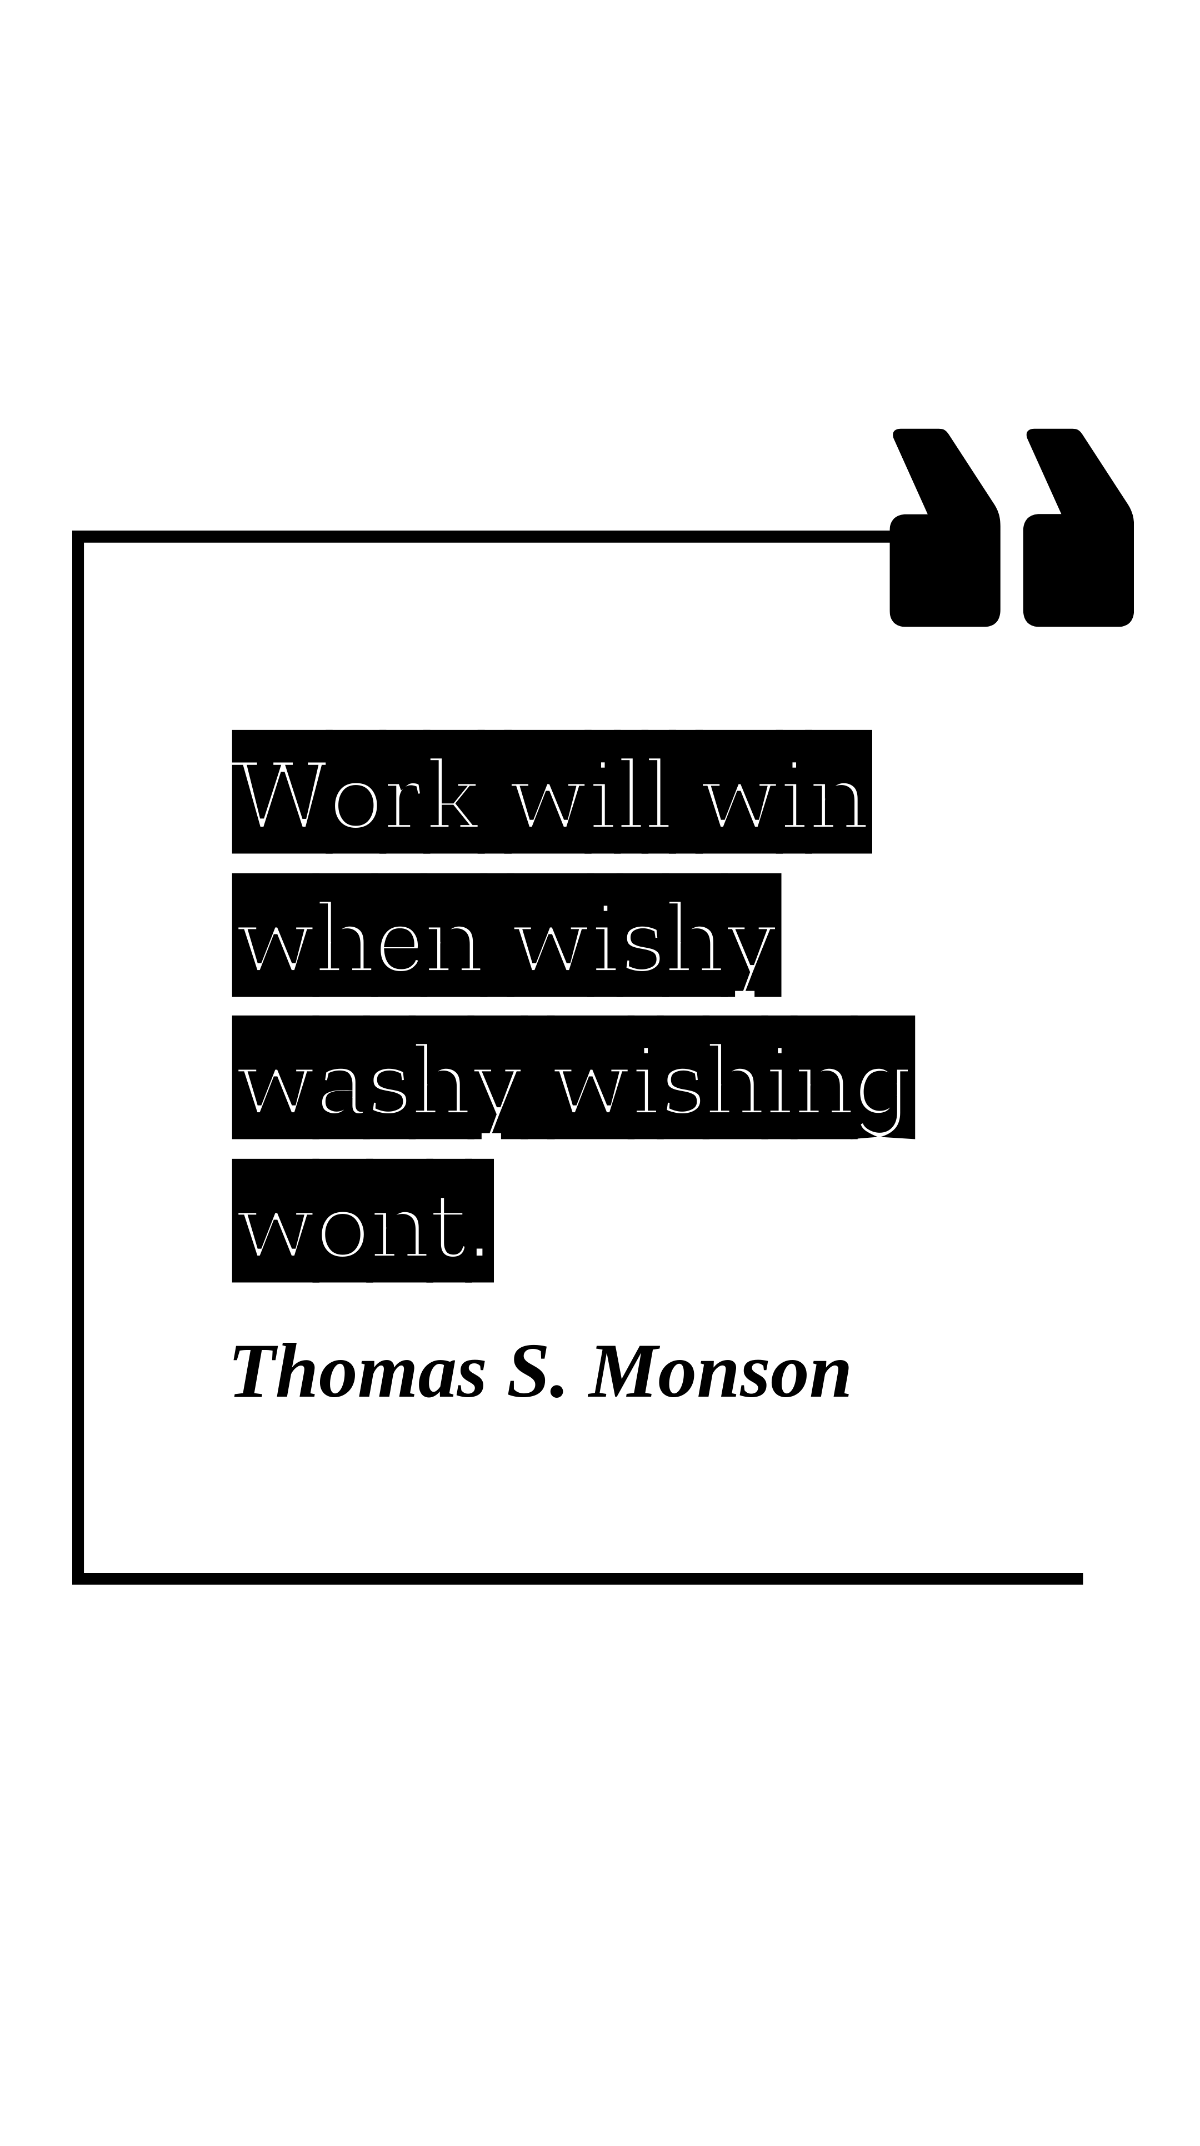 Free Thomas S. Monson - Work will win when wishy washy wishing wont. Template